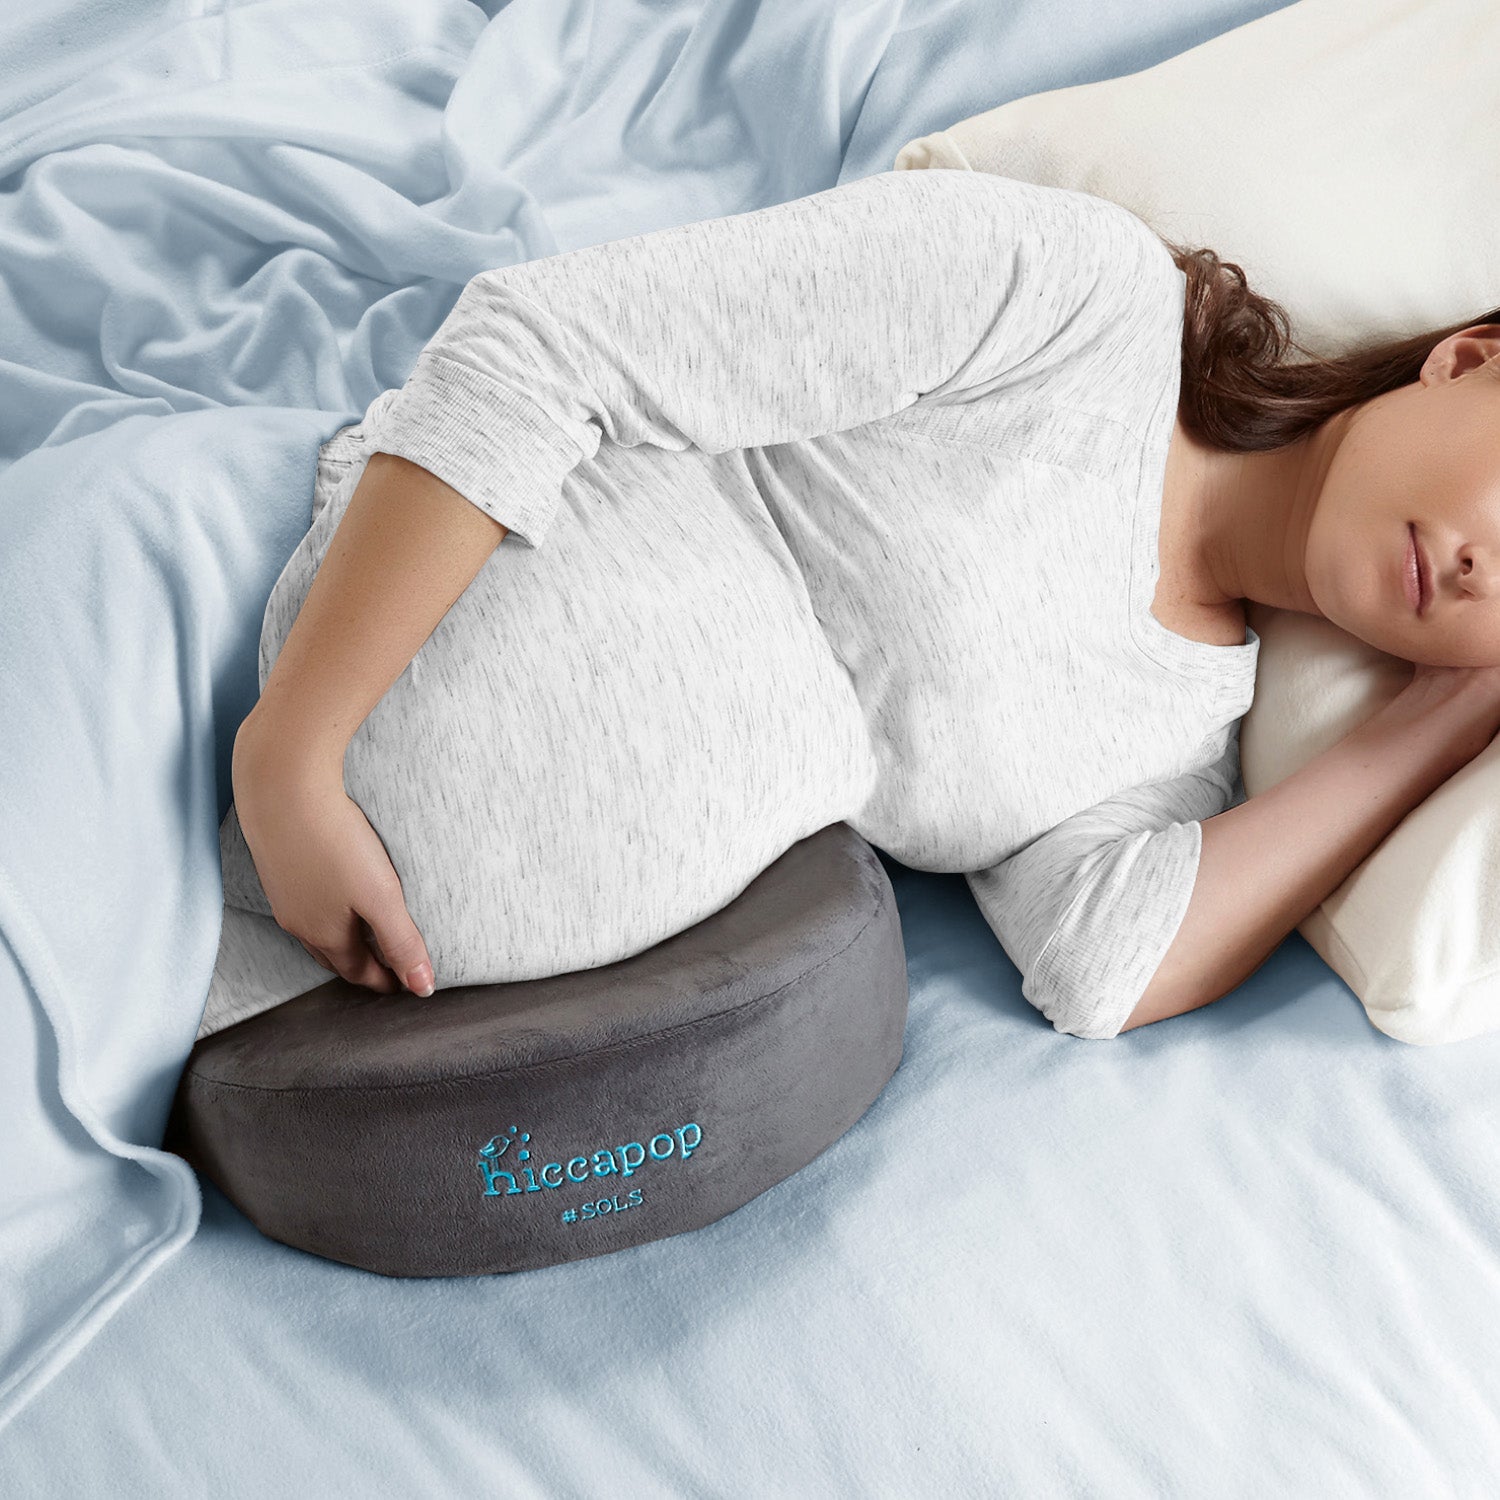 The Pregnancy Pillow